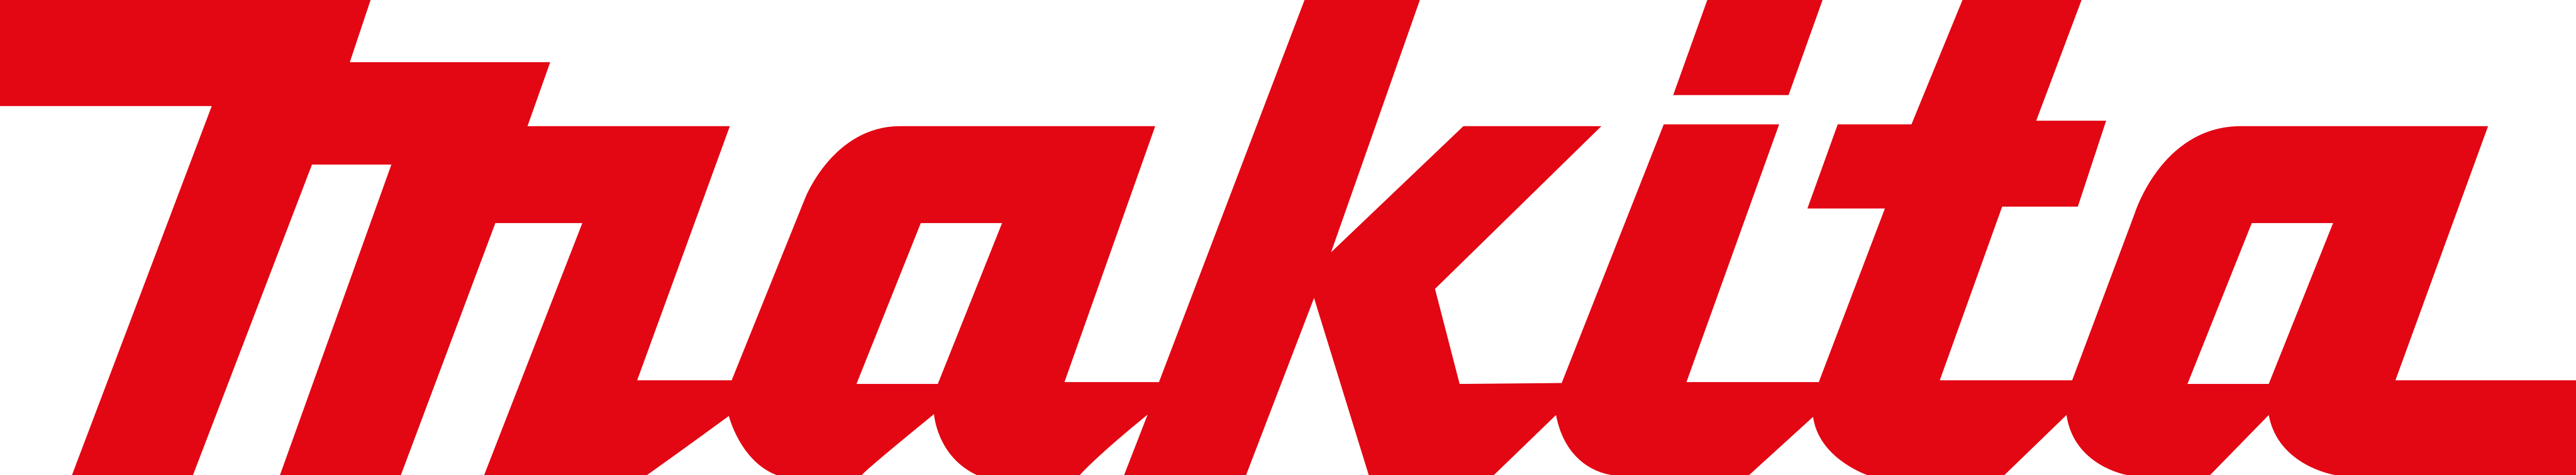 makita logo 6 - Makita Logo